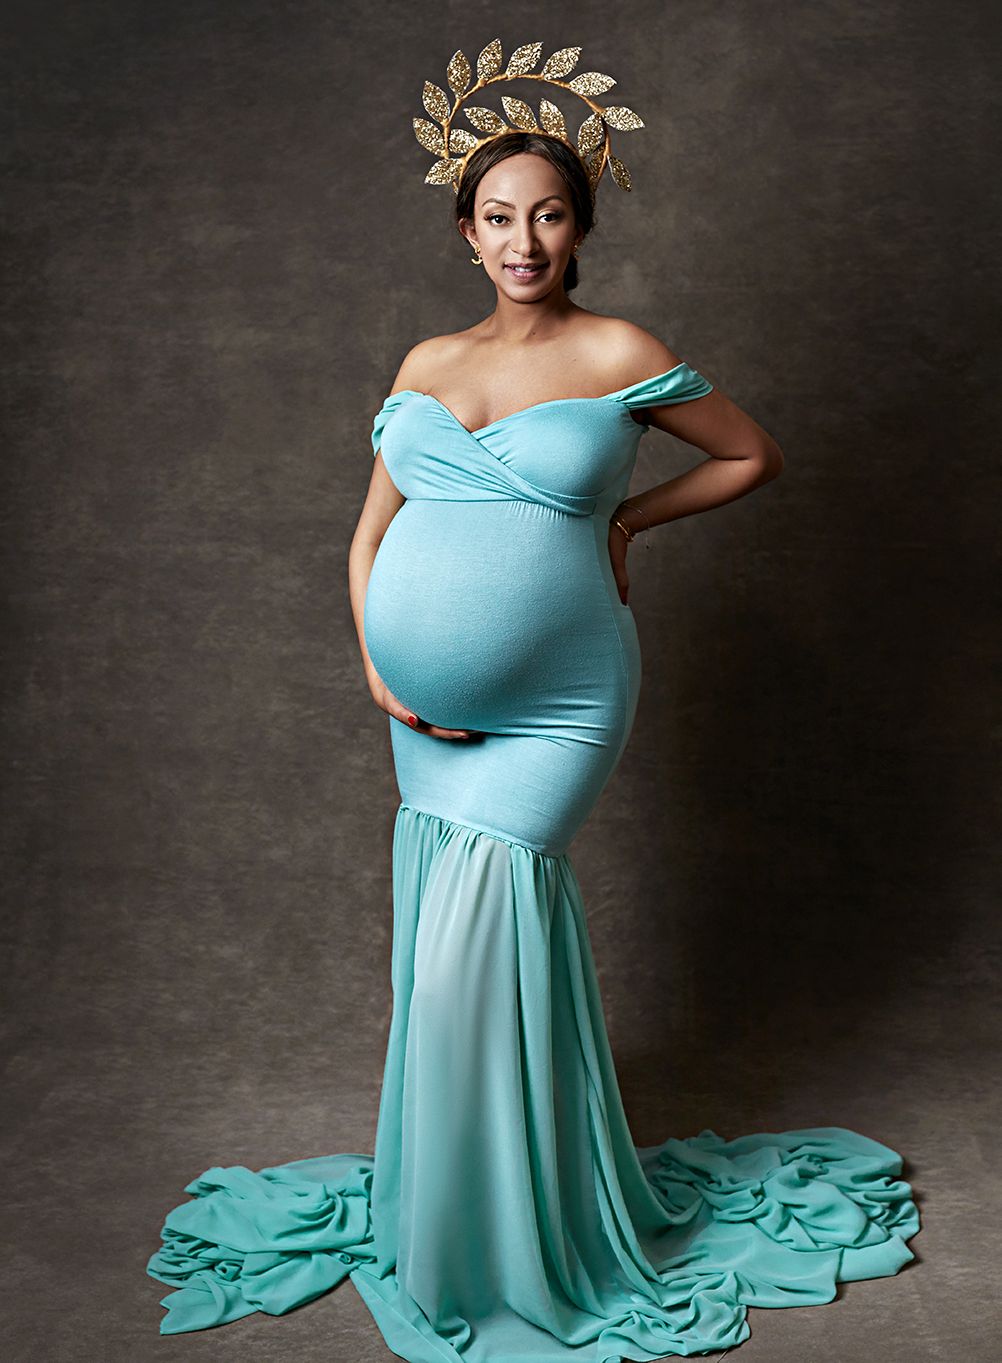 professional-baltimore-pregnancy-photoshoot